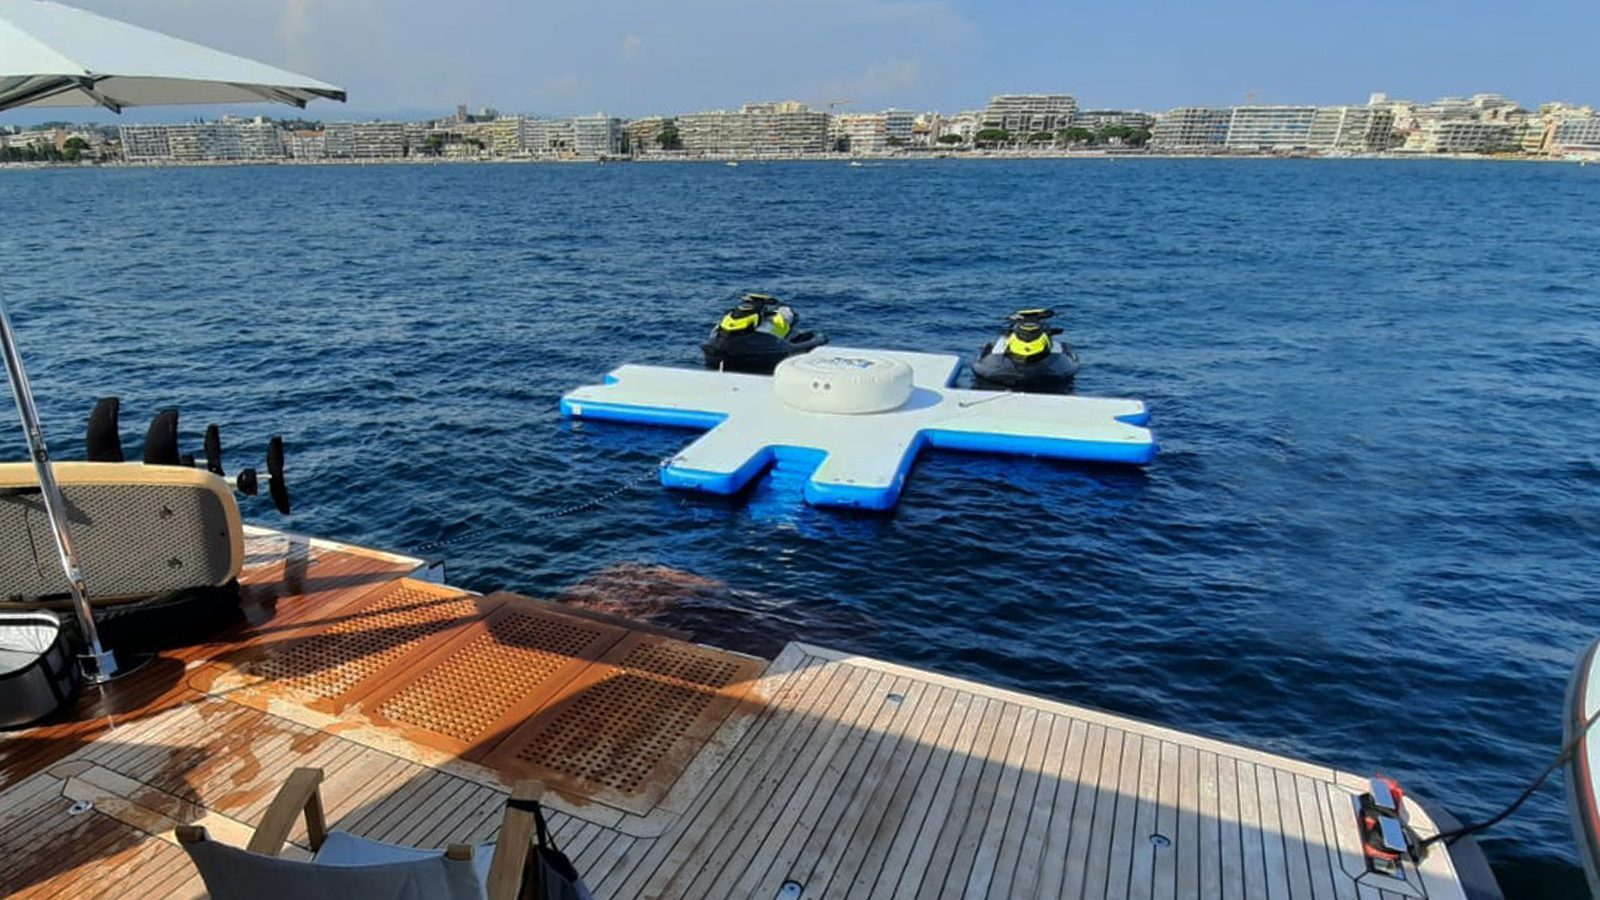 Toy Island with jet skis